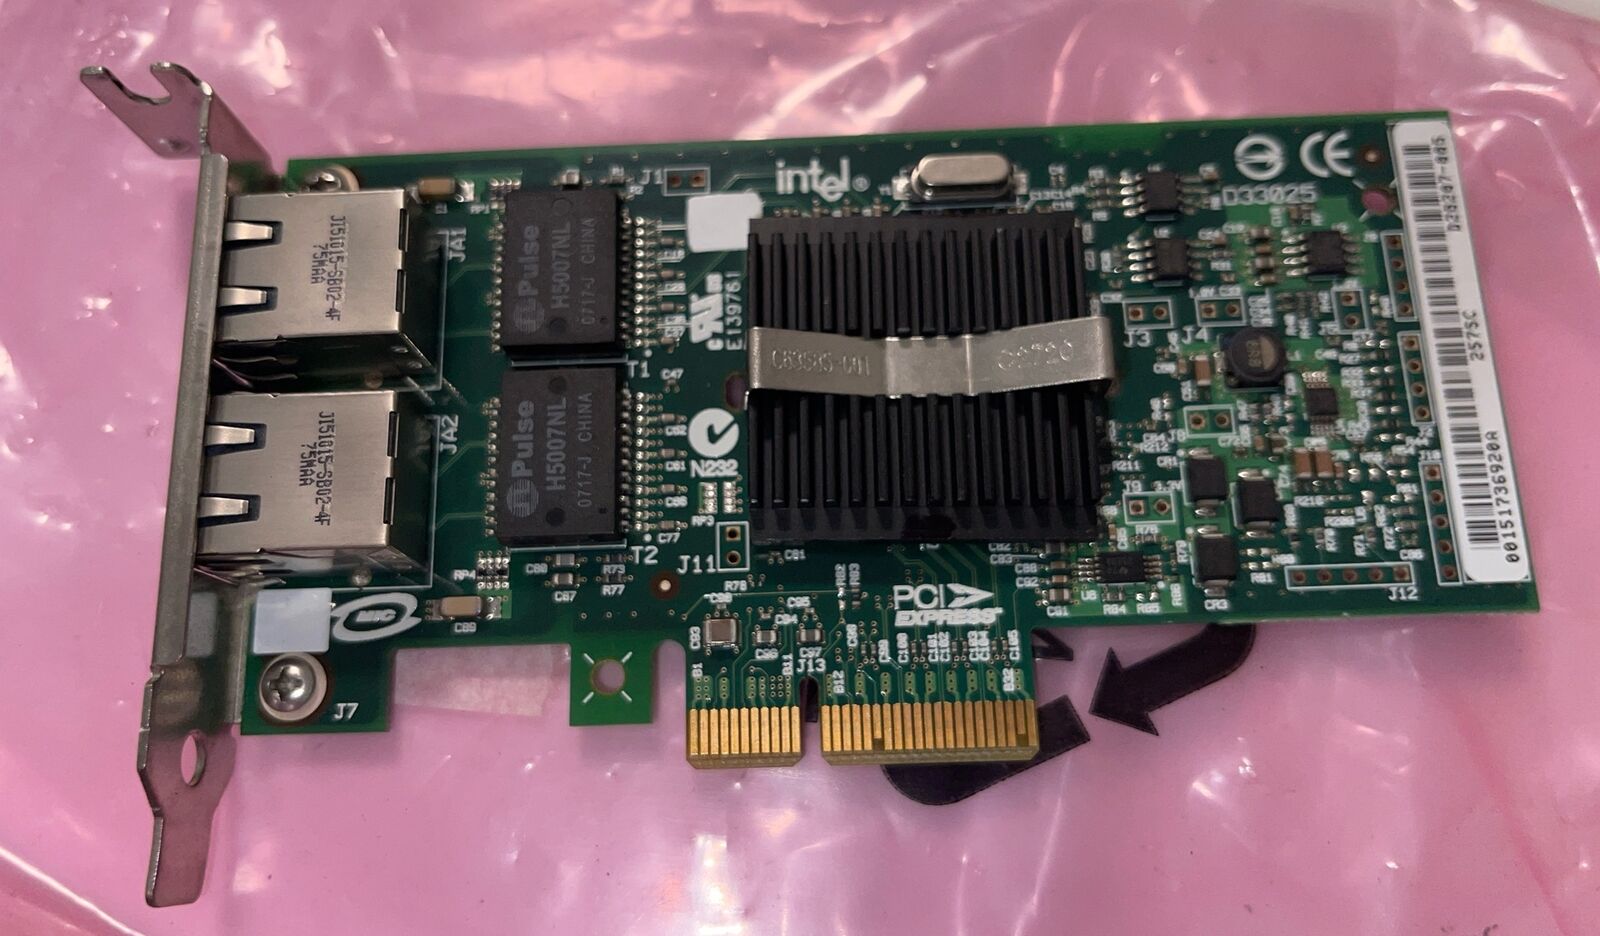 Intel Sun 371-0905-03 Dual-Port PCI-e 1Gbps Gigabit Ethernet Server Network Card